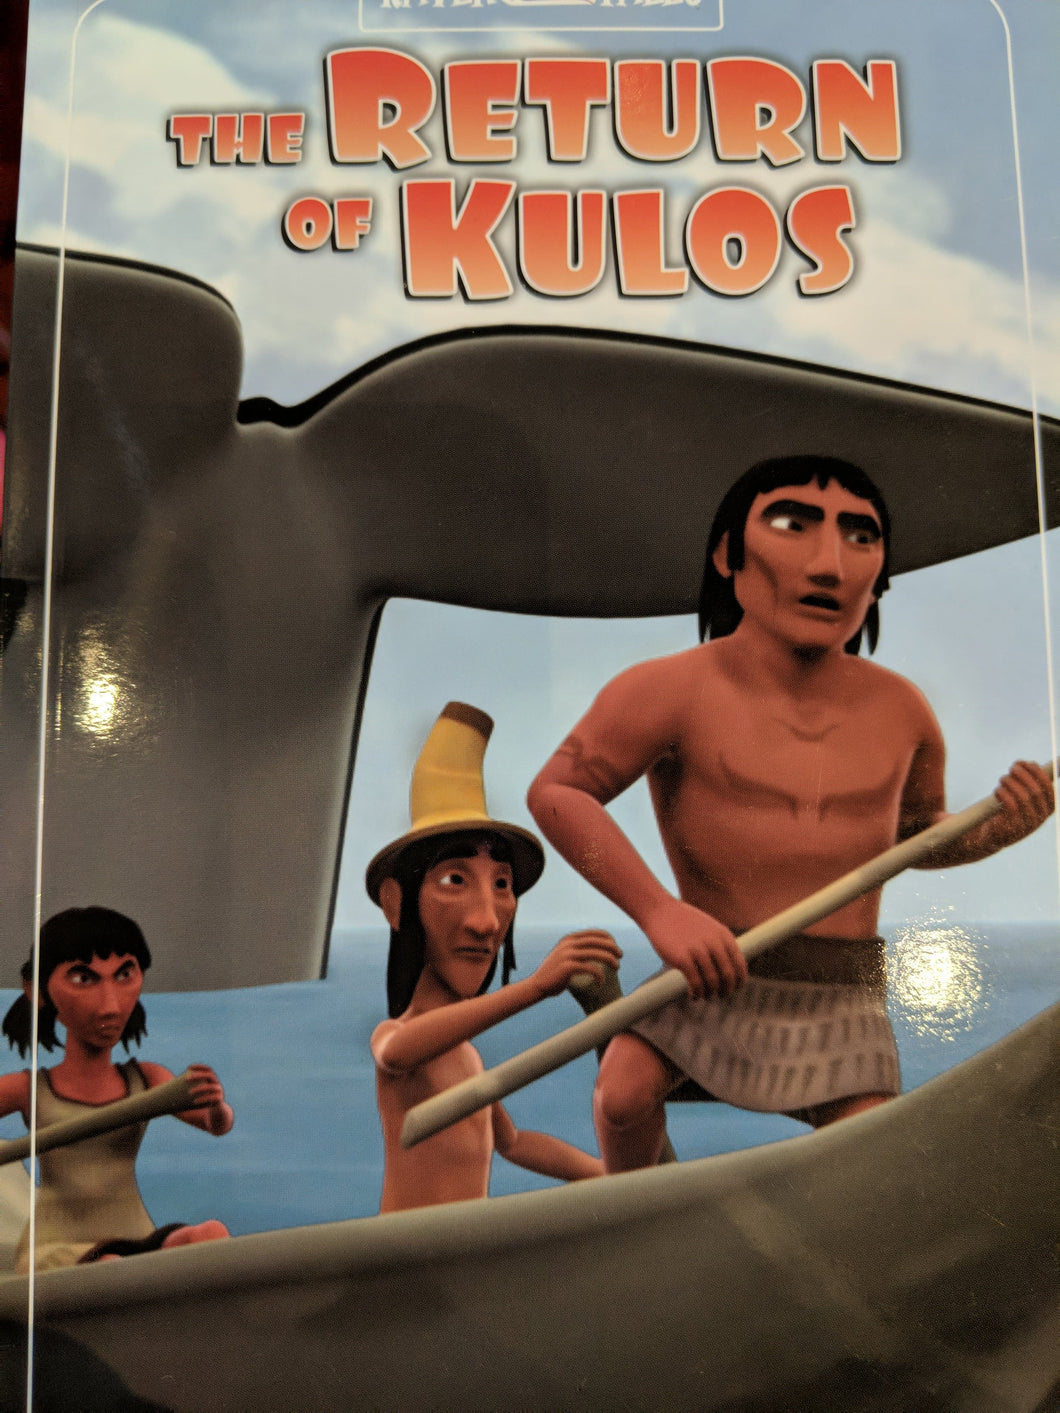 The Return of Kulus - Book 25